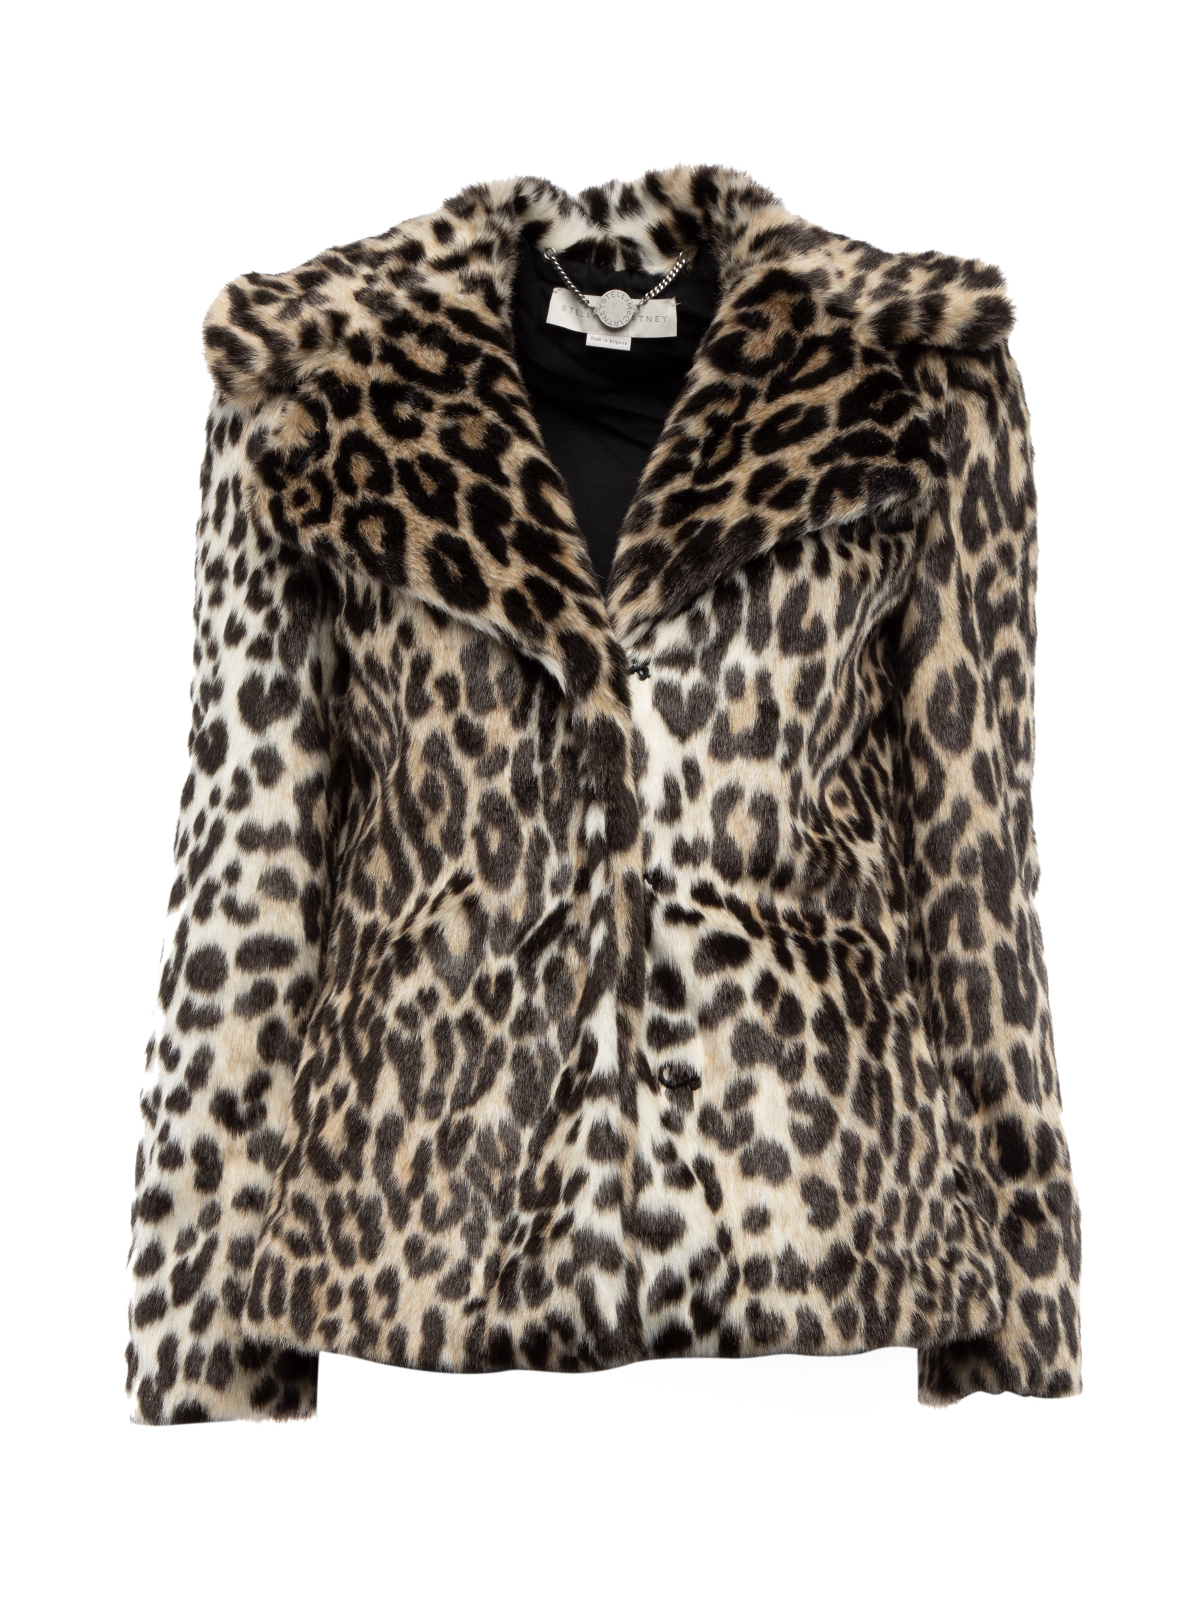 Stella McCartney, Ponyhair Leopard Jacket